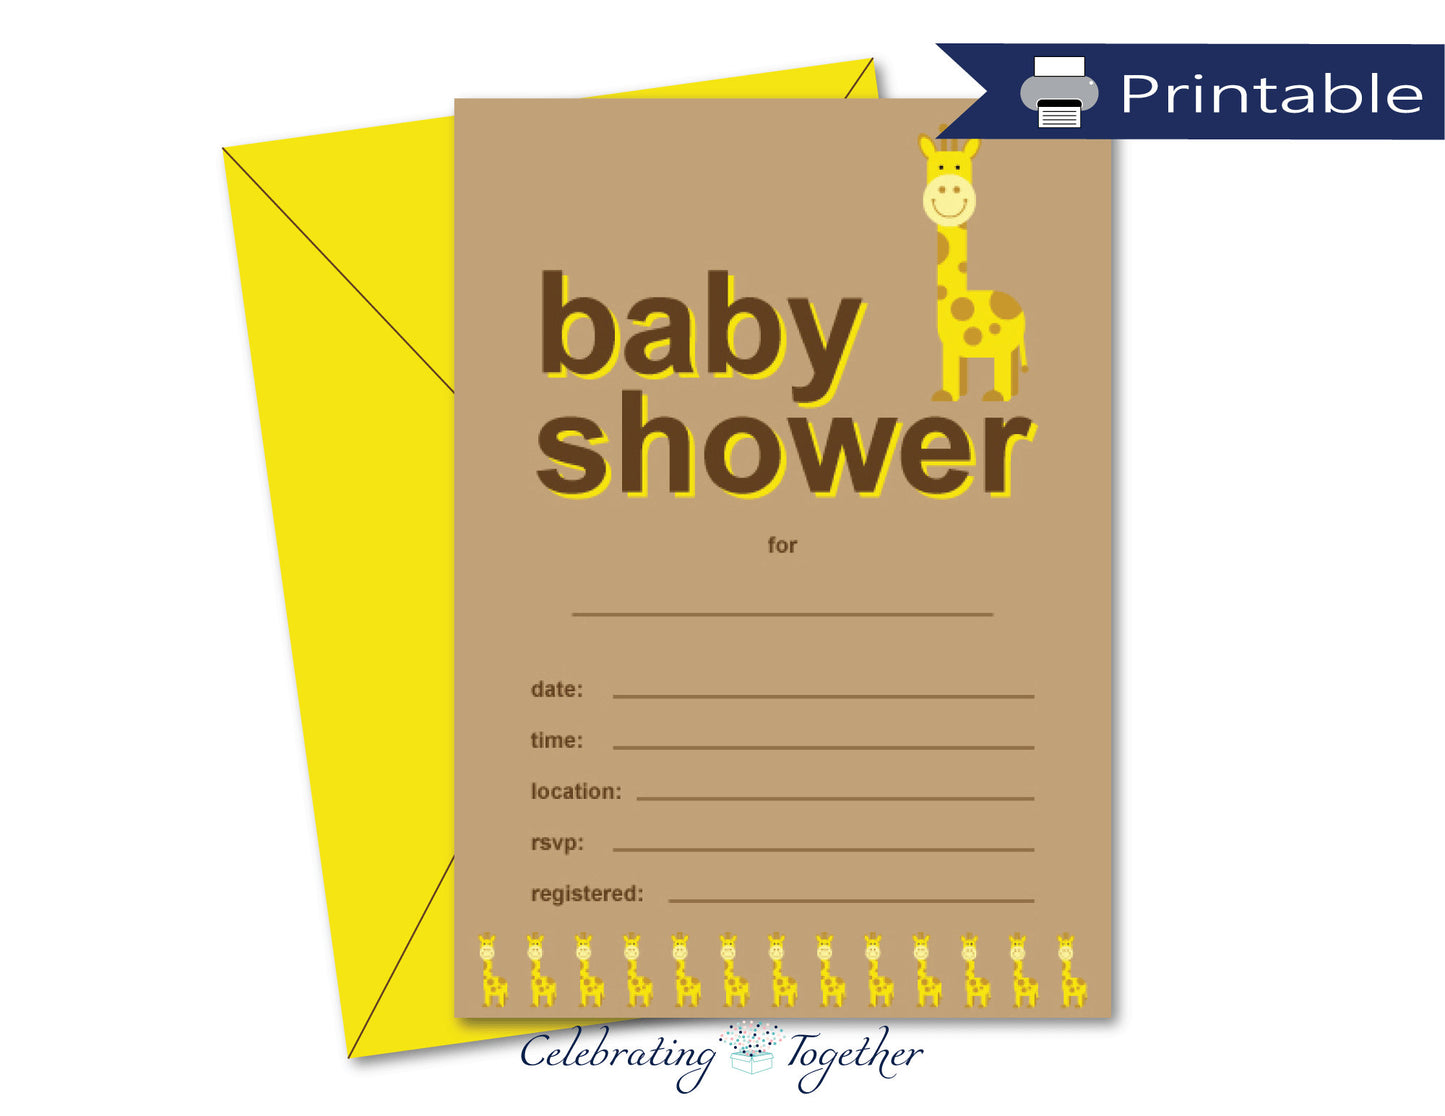 printable baby shower invitations - Celebrating Together